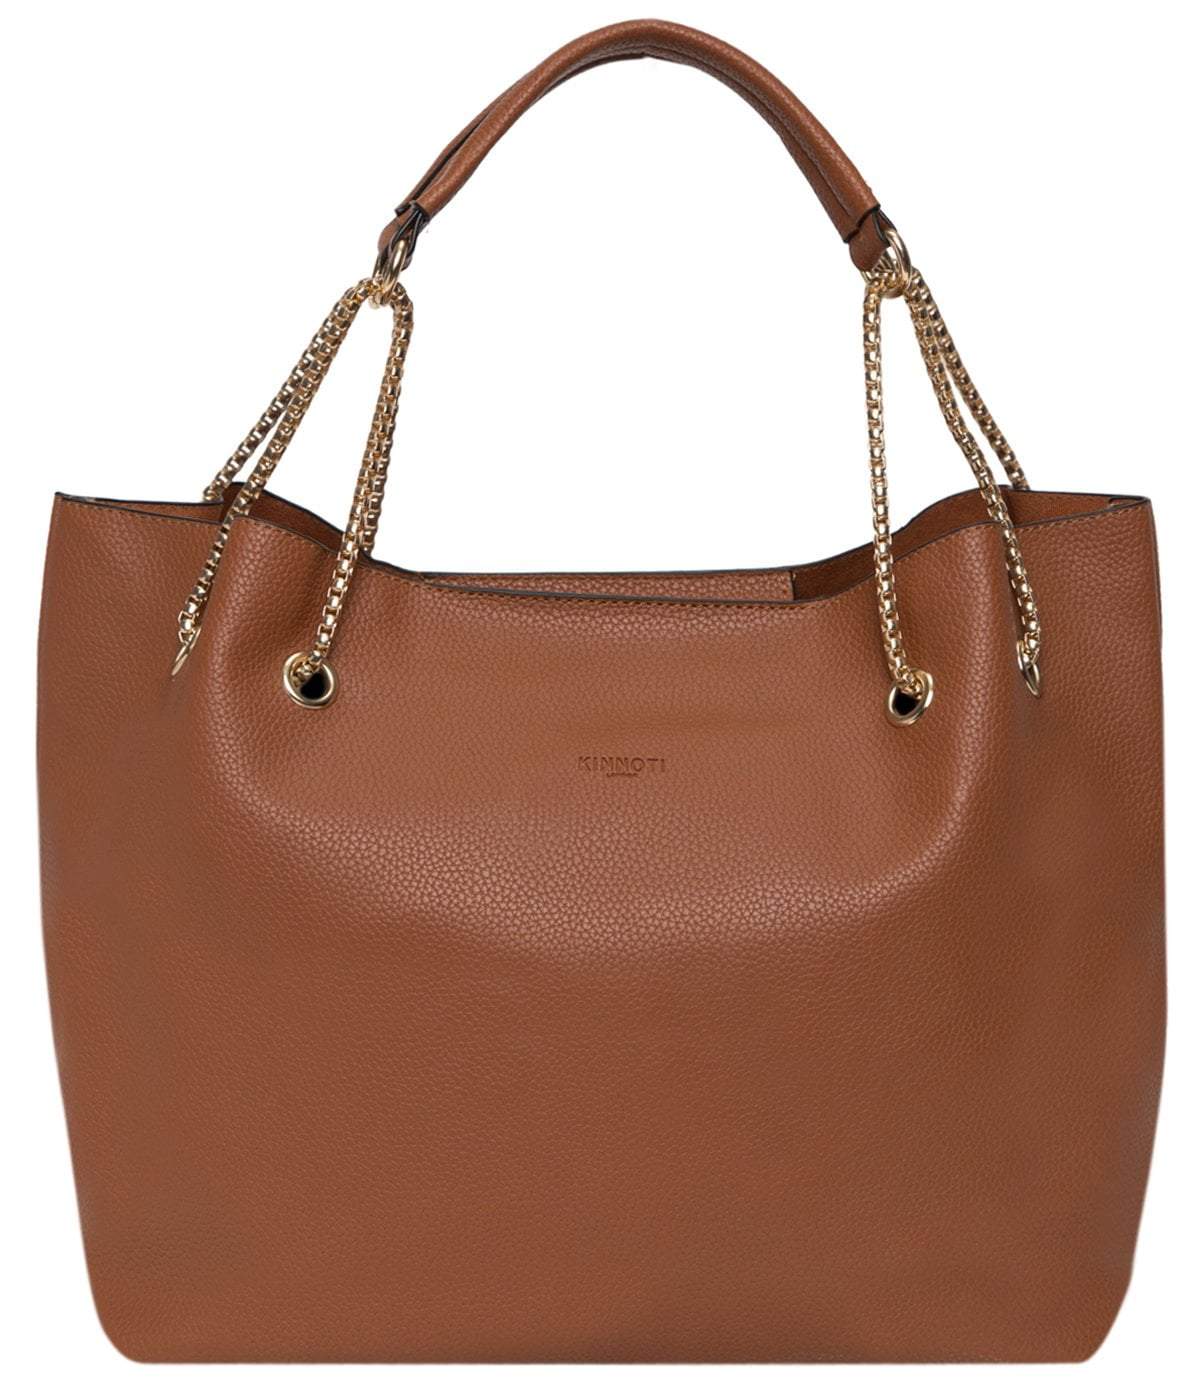 kinnoti Handbags Brown Black color Chain Tote Bag